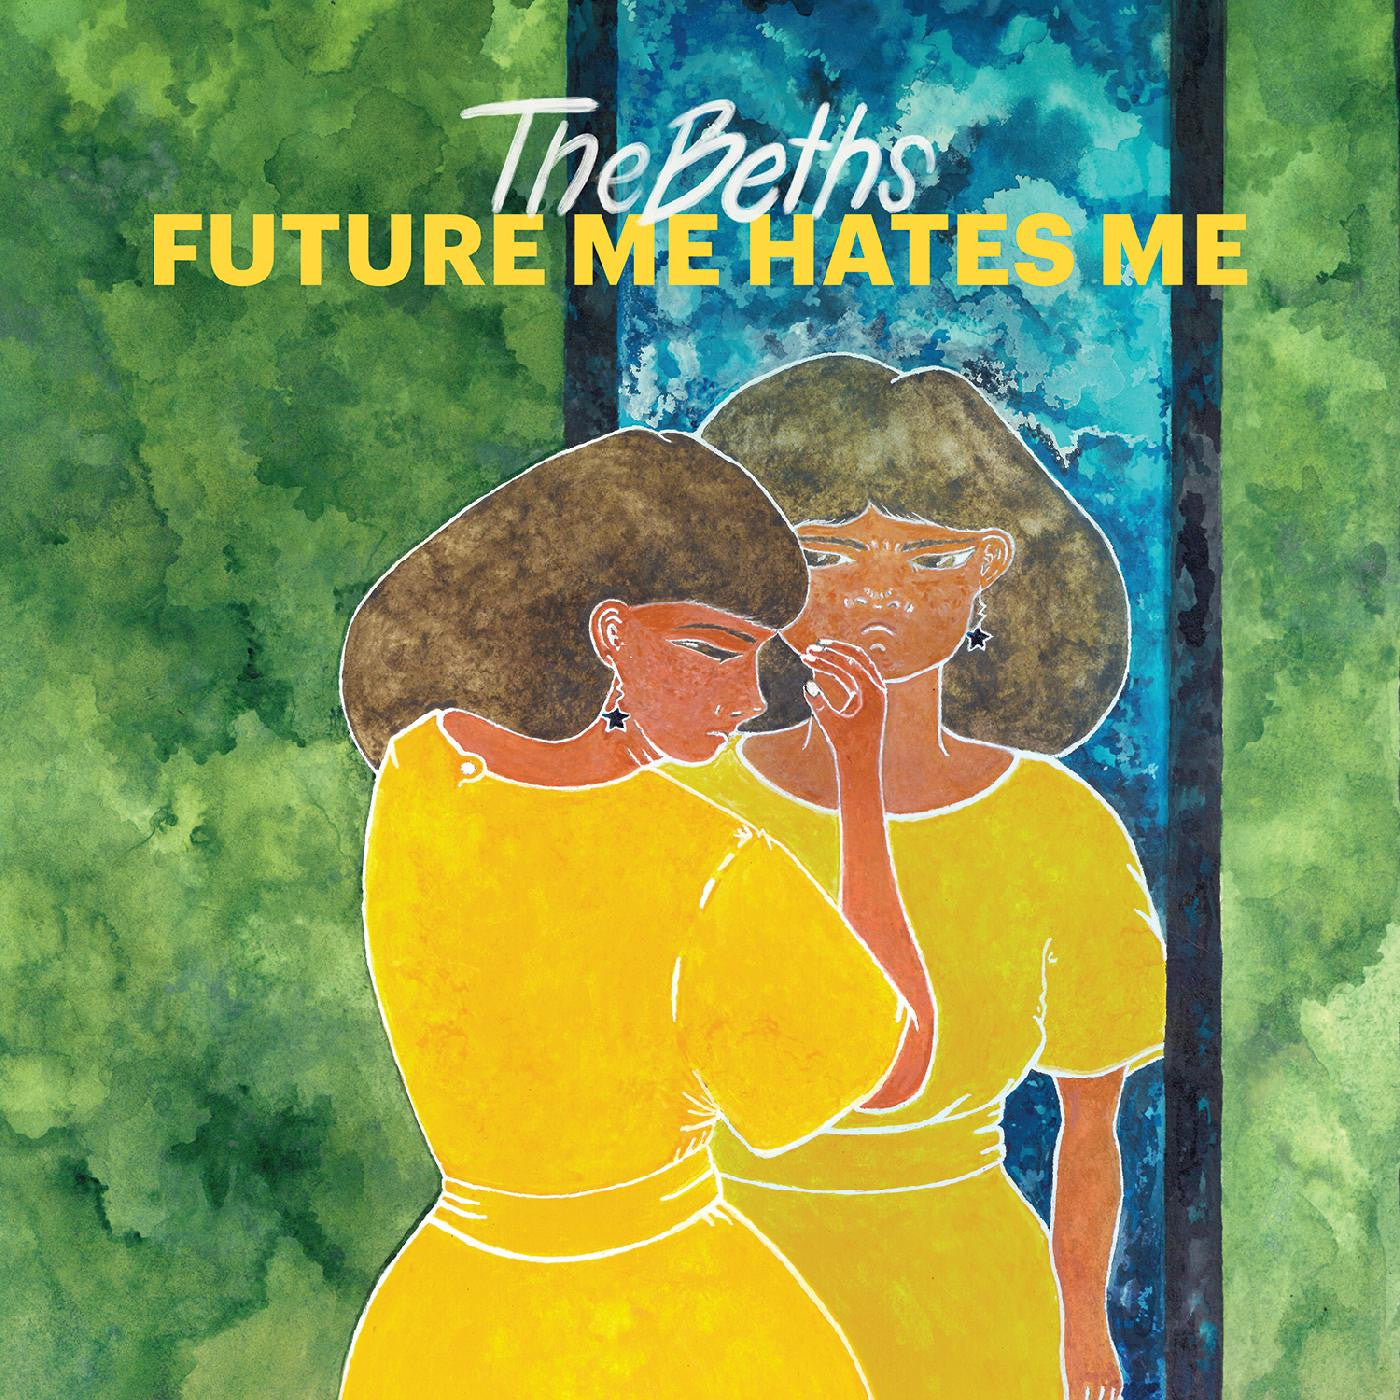 Beths, The - Future Me Hates Me (Baby Blue Vinyl)